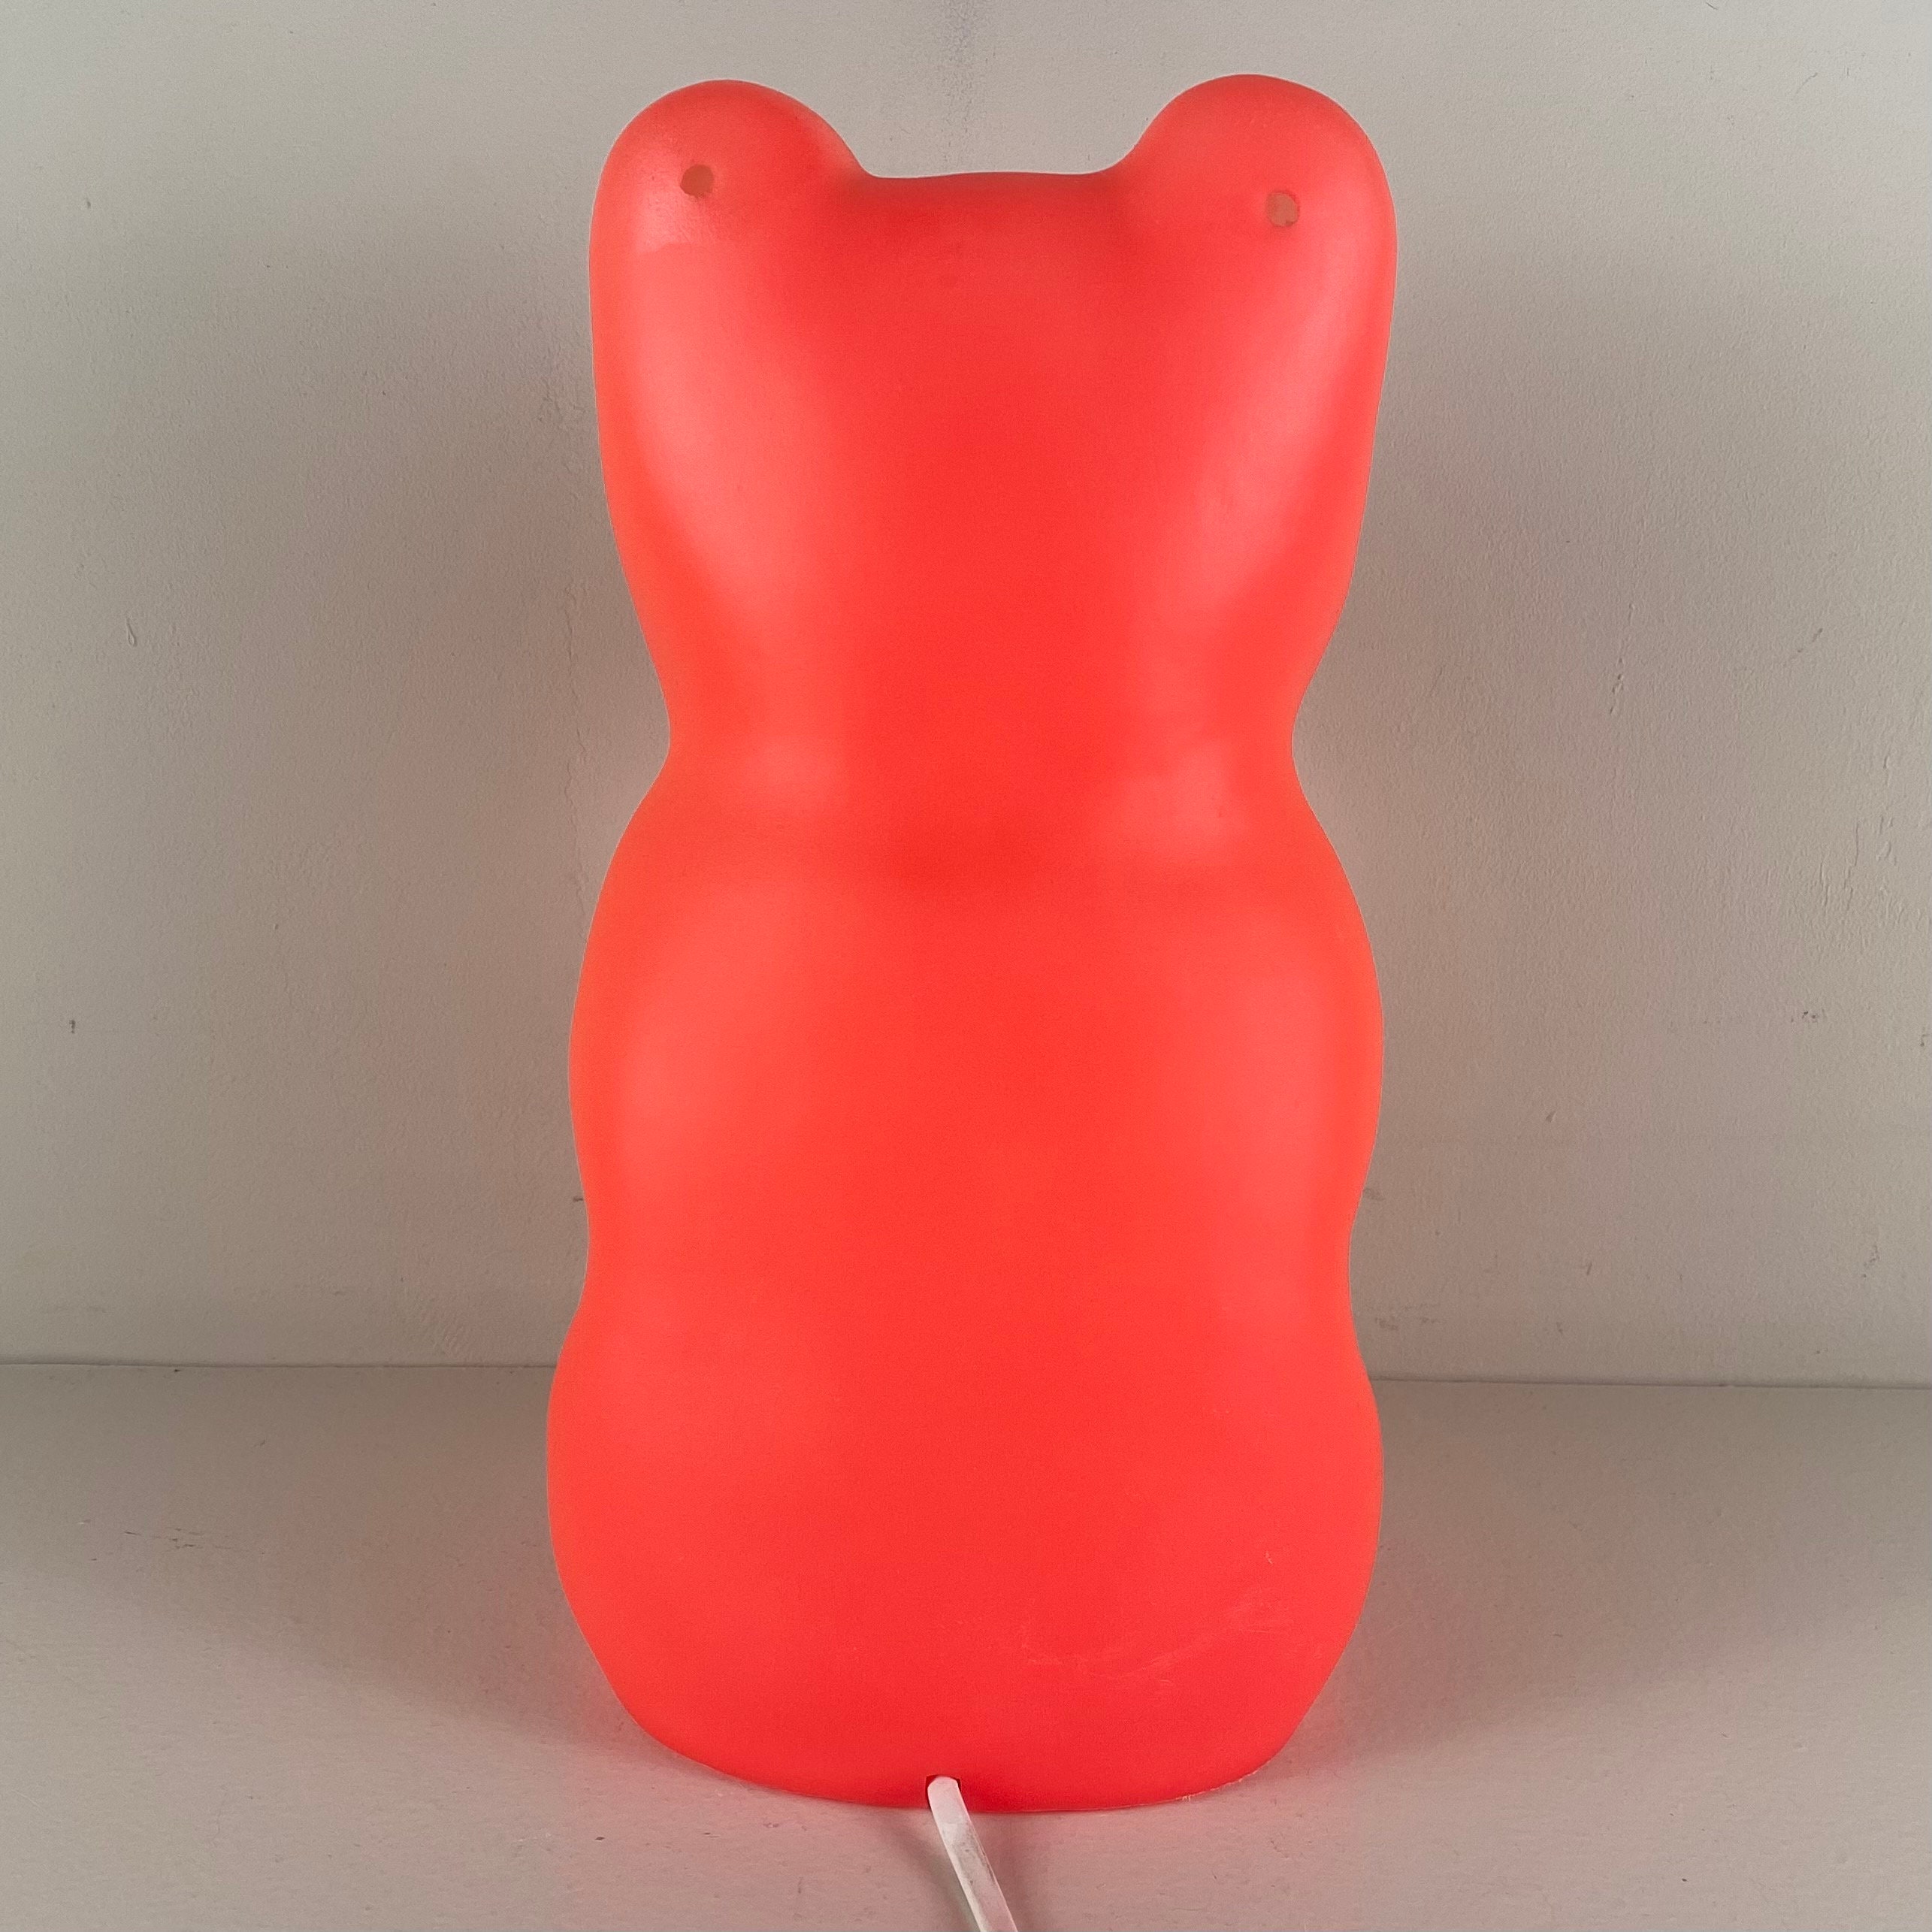 Gummy Bear Lamp Red / Vintage 90s Plastic Night Lamp -  Israel